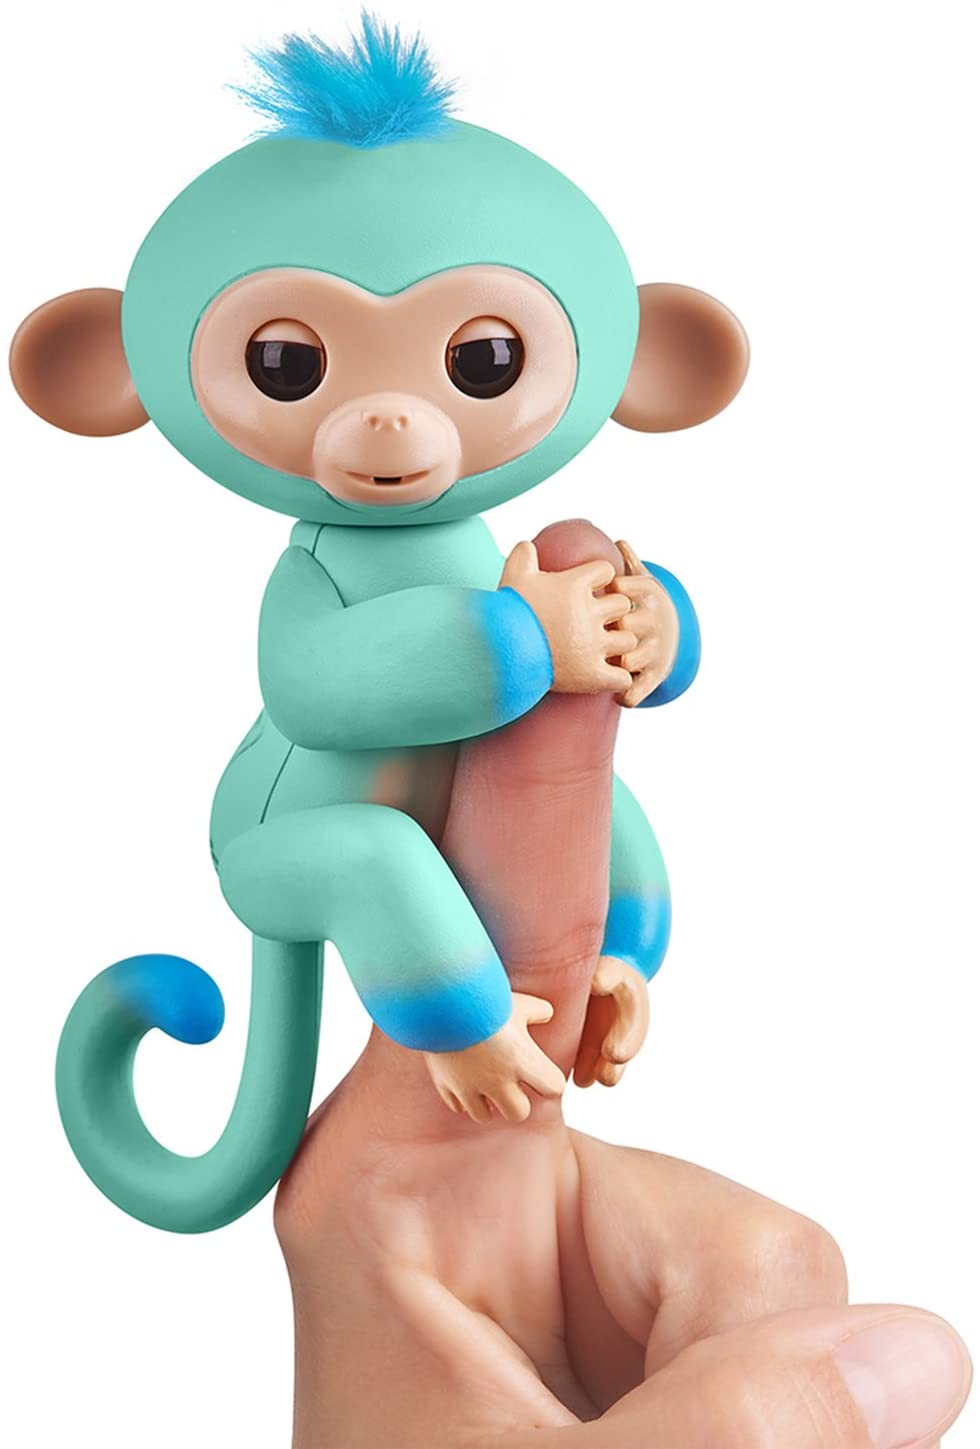 Fingertip Monkey Toy